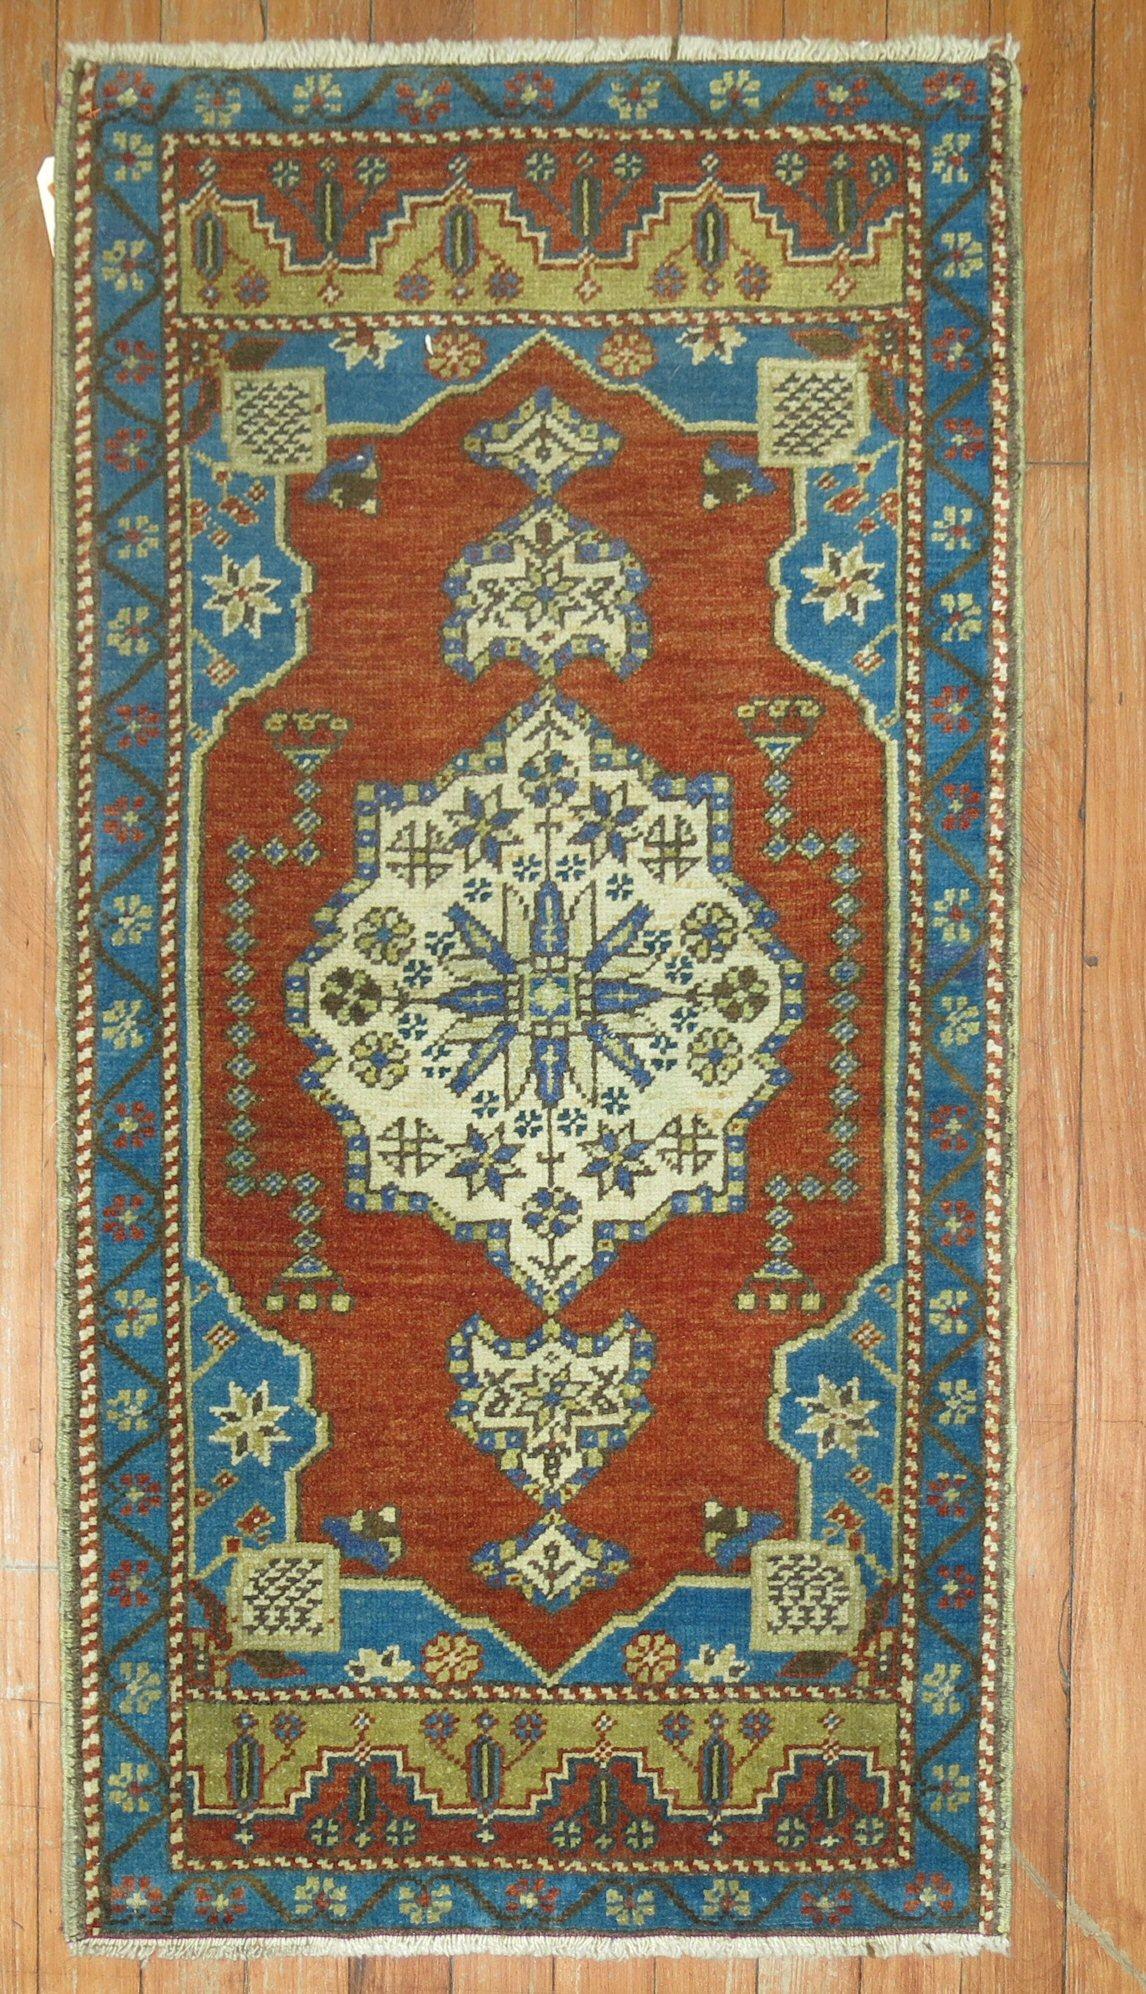 early 20th-century Turkish mini rug

Measures: 1'9'' x 3'3''.